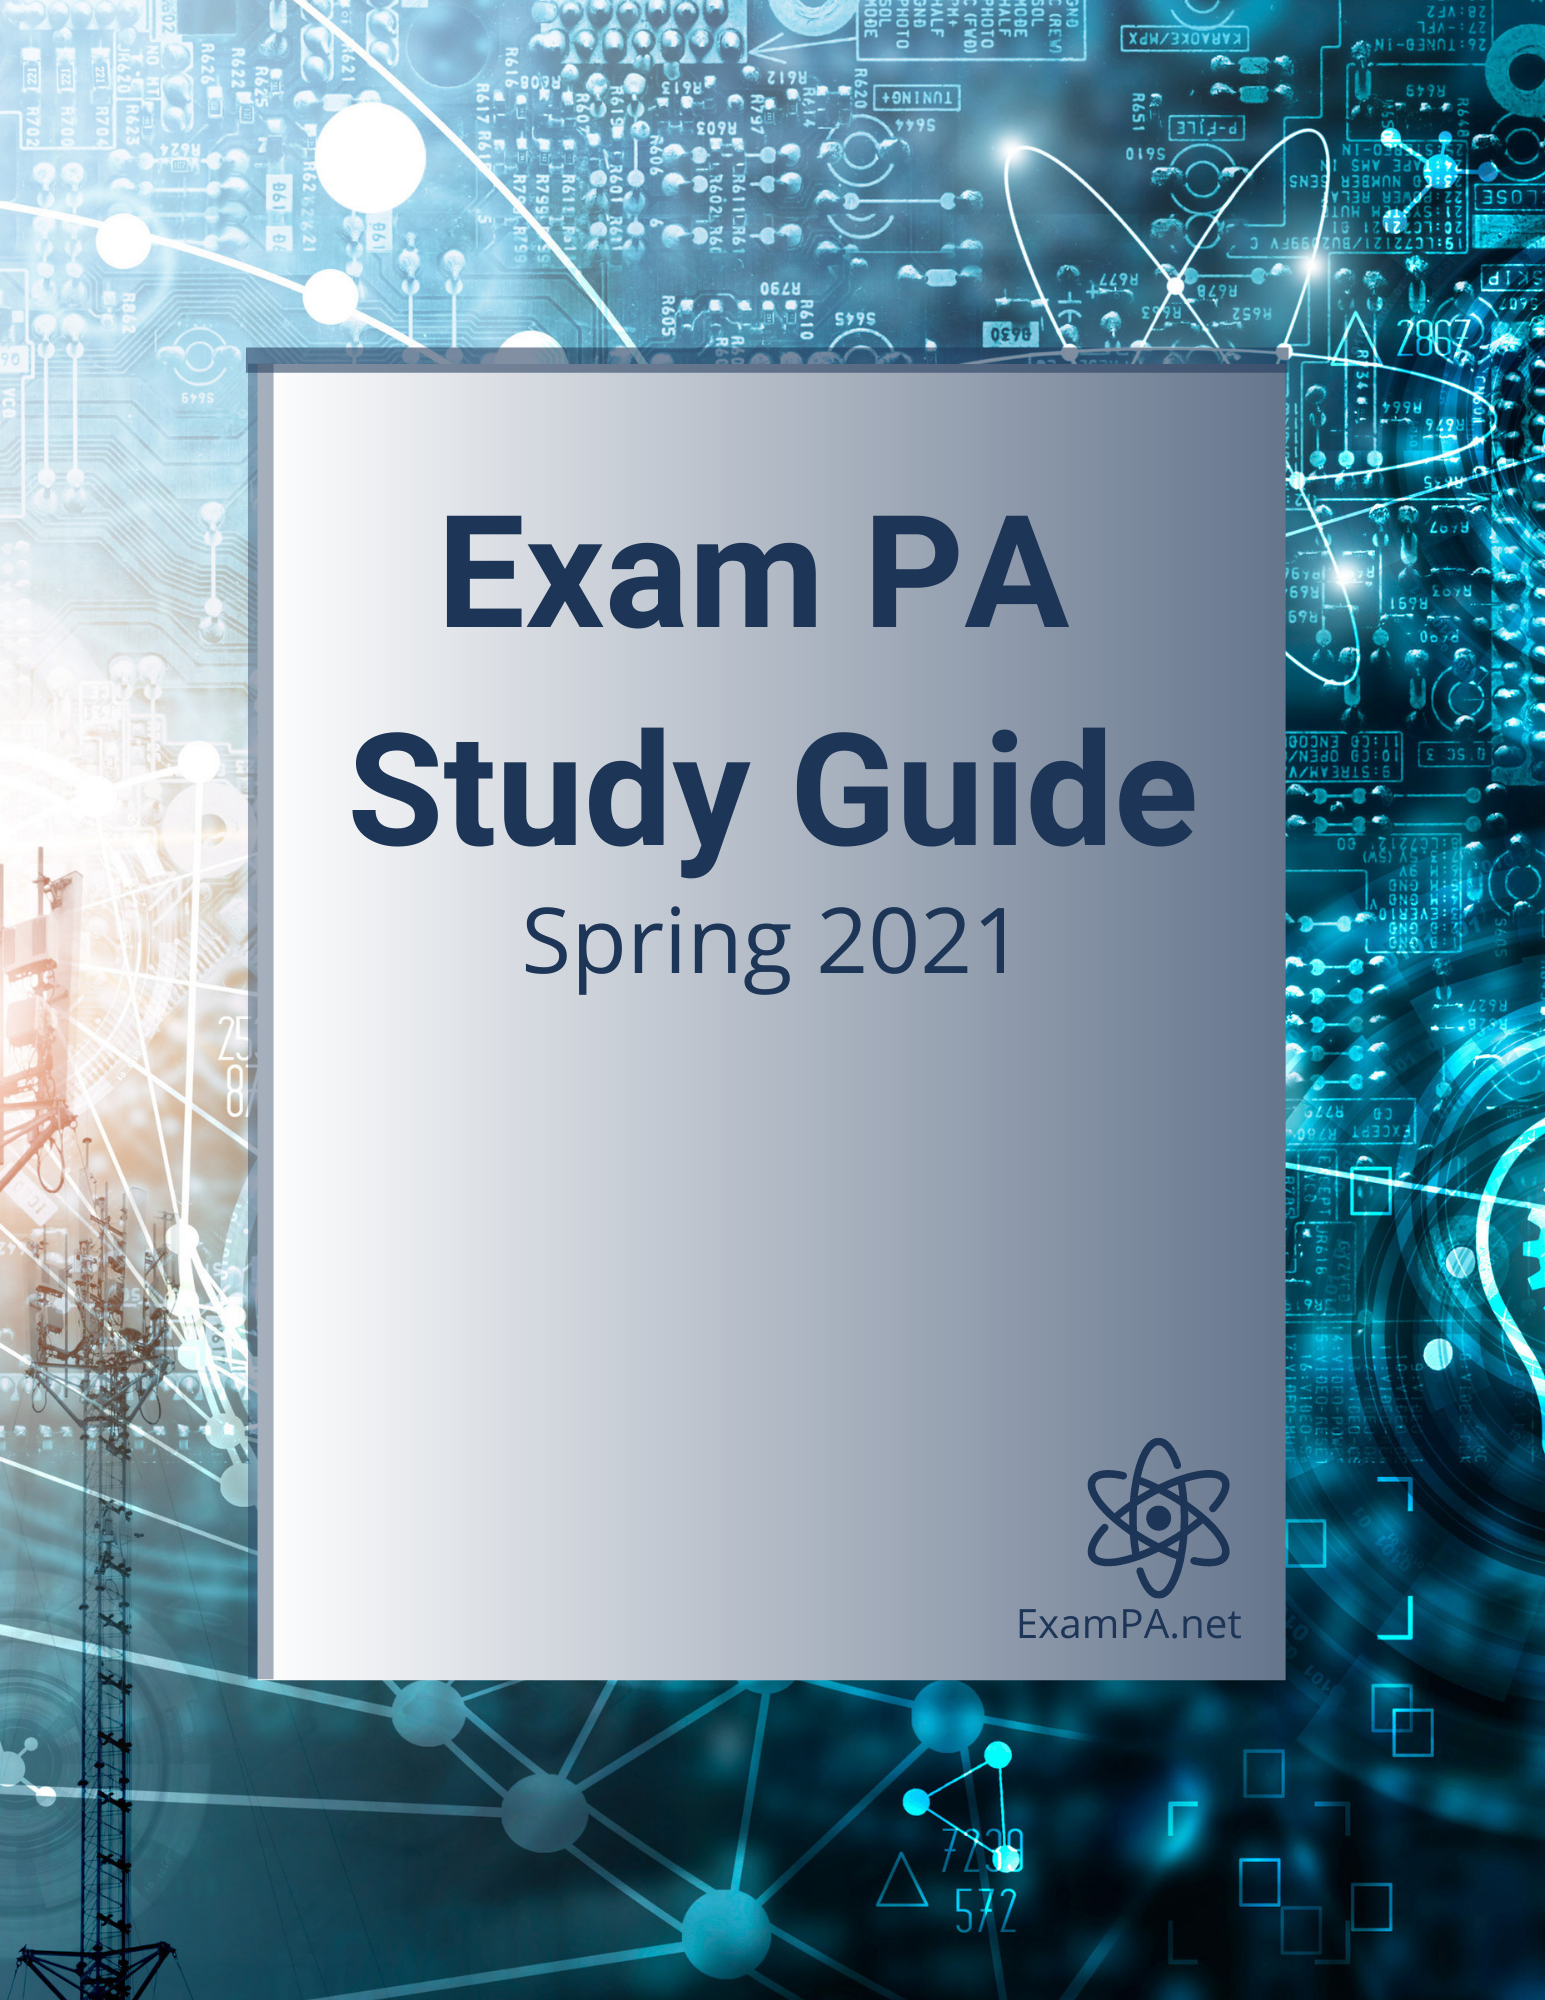 Exam PA Study Guide, Fall 2020